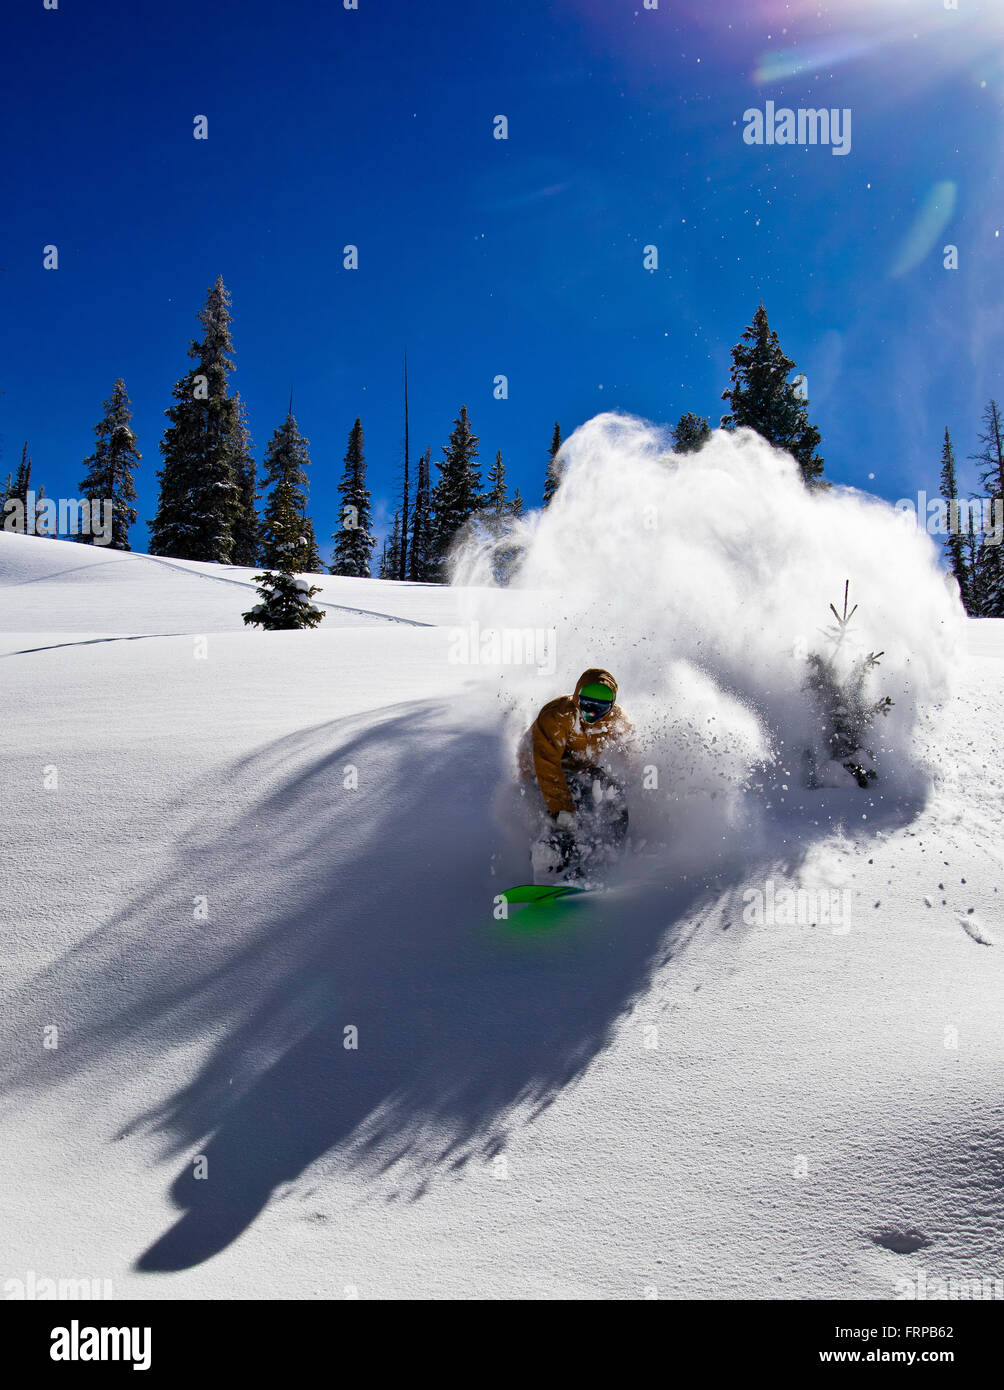 Powder Snowboarding Stock Photo